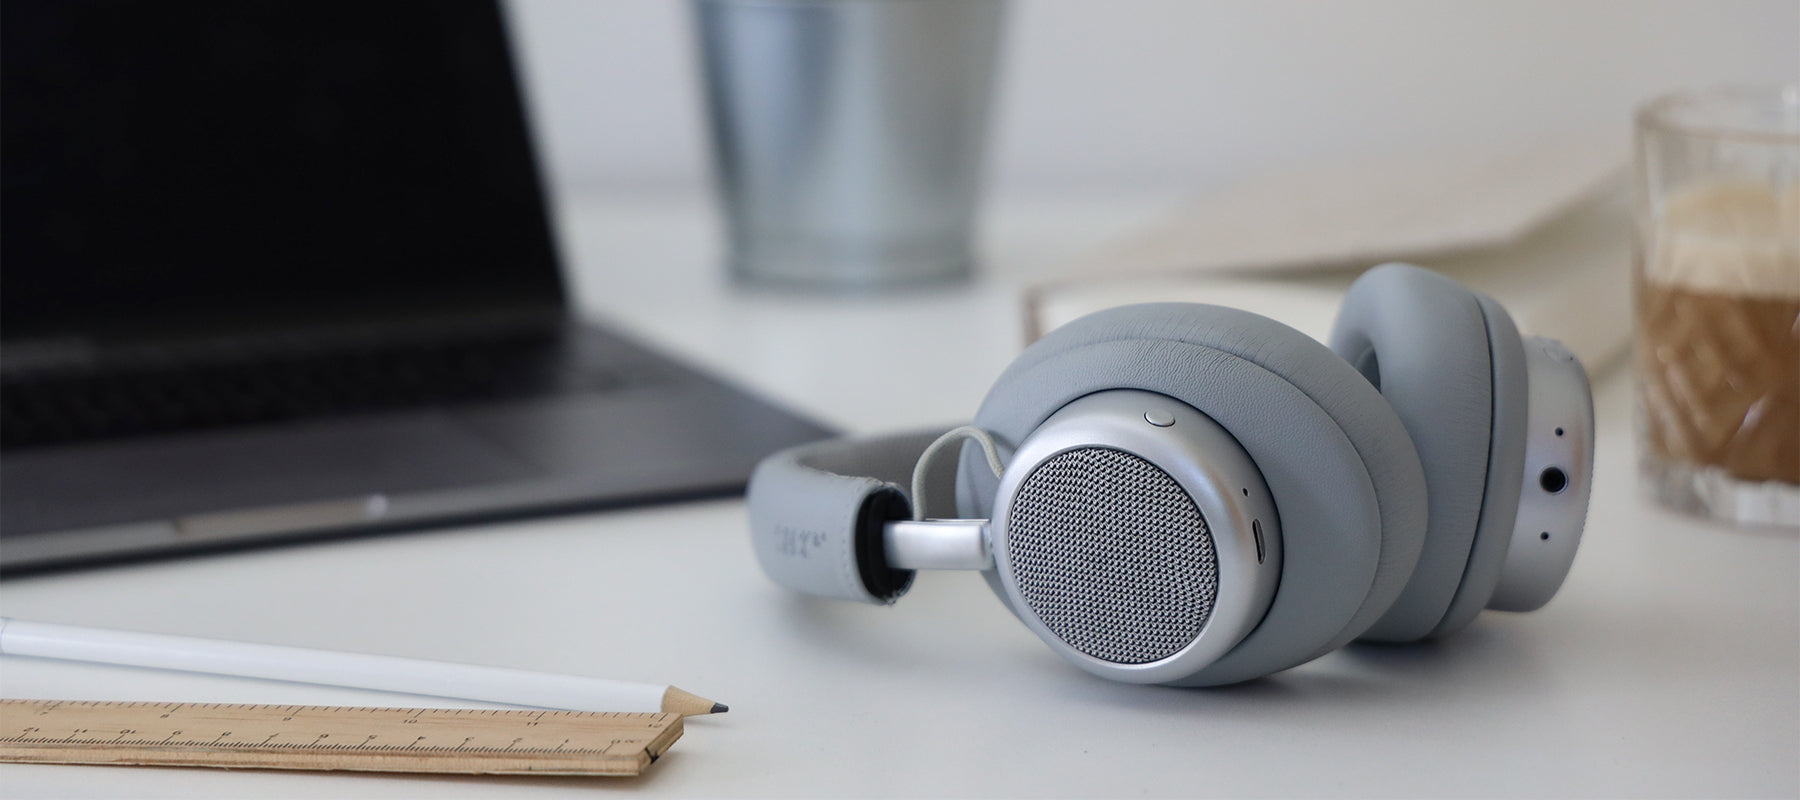 SACKit TOUCHit Over-ear bluetooth høretelefoner i farven Silver på skrivebord